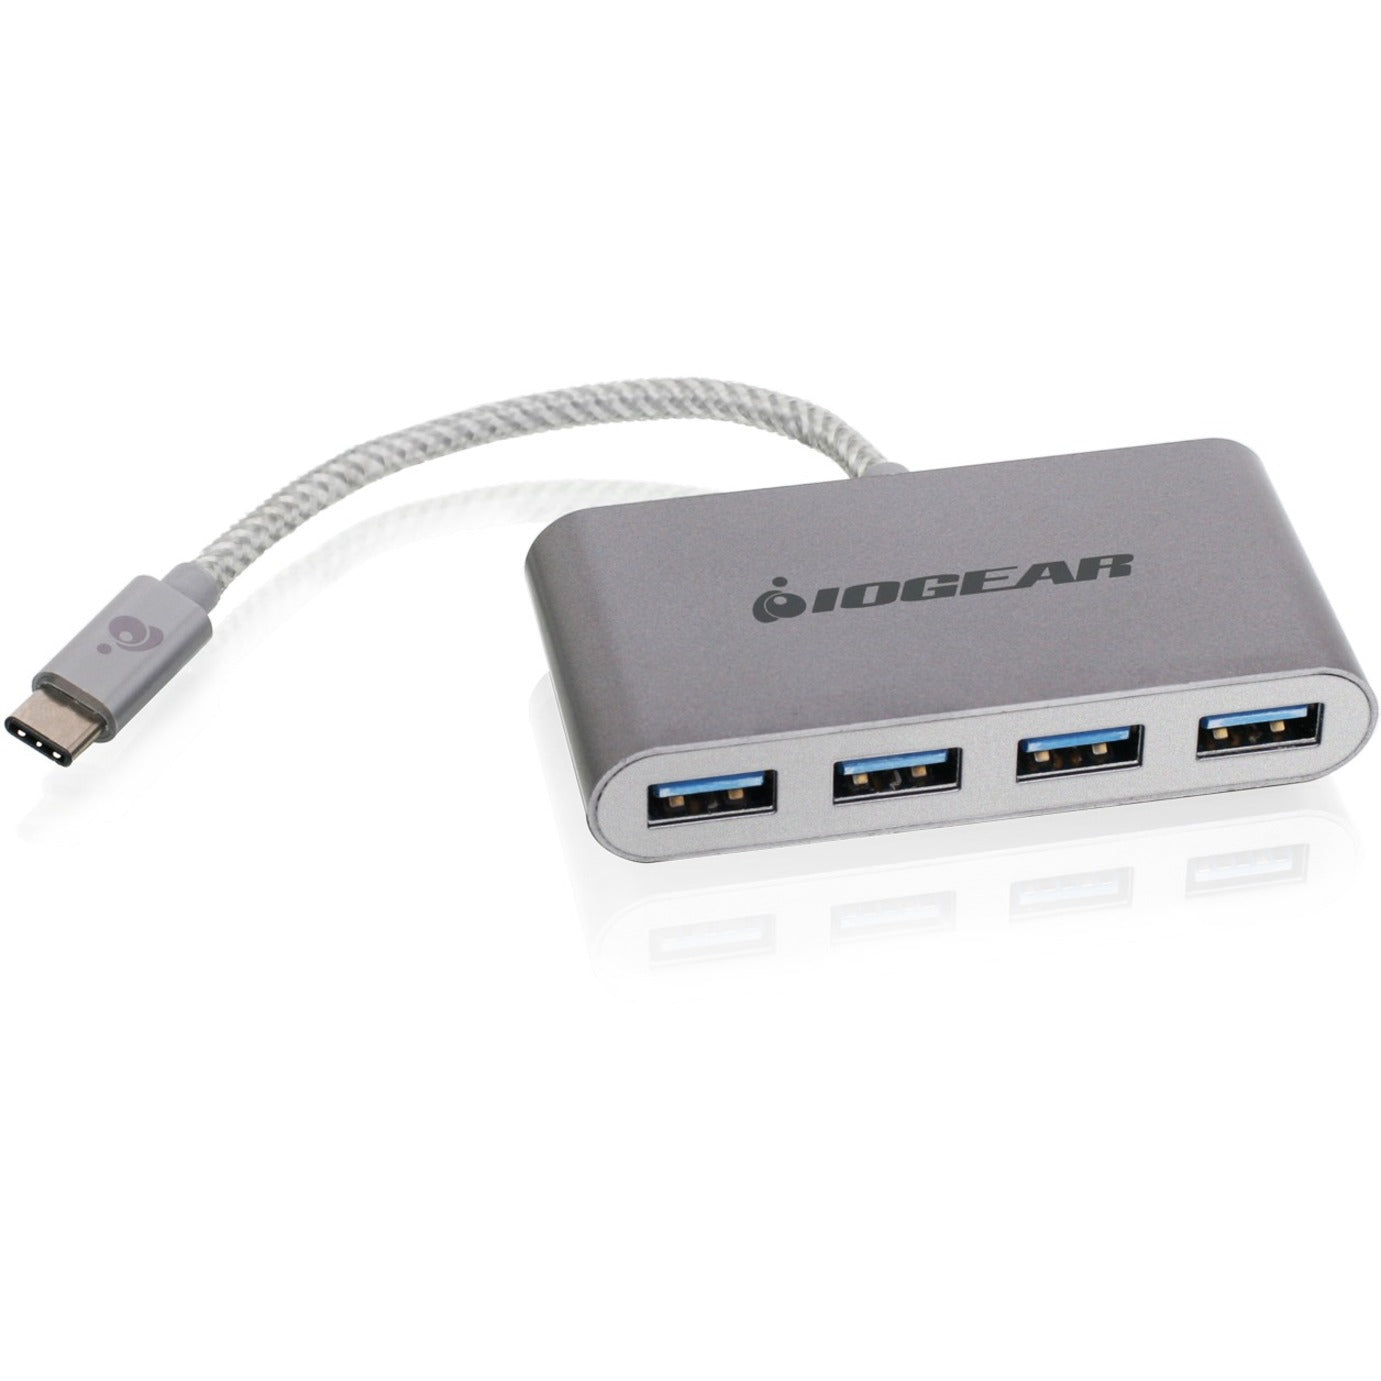 IOGEAR GUH3C14 HUB-C USB-C to 4-port USB-A Hub, 4 USB 3.0 Ports, PC/Mac Compatible